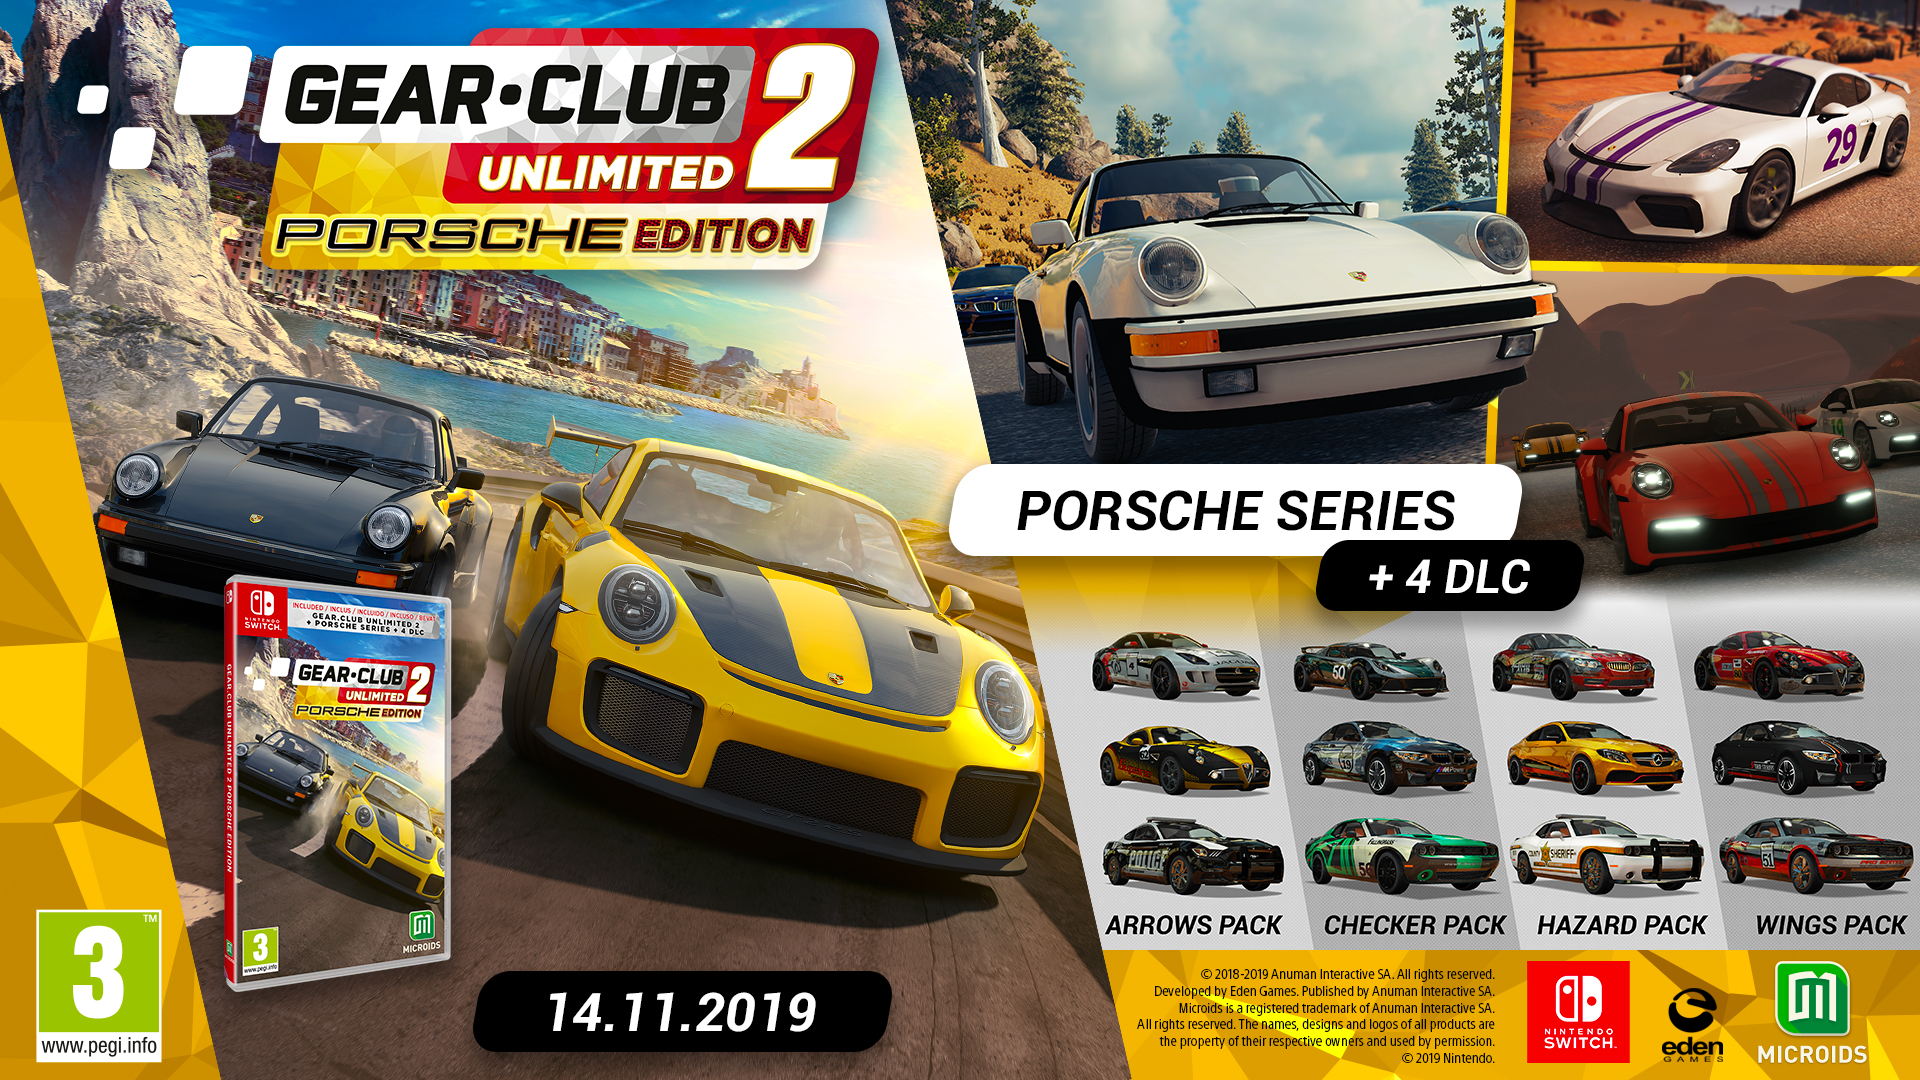 Gear Club Unlimited 2 Porsche Edition Microids